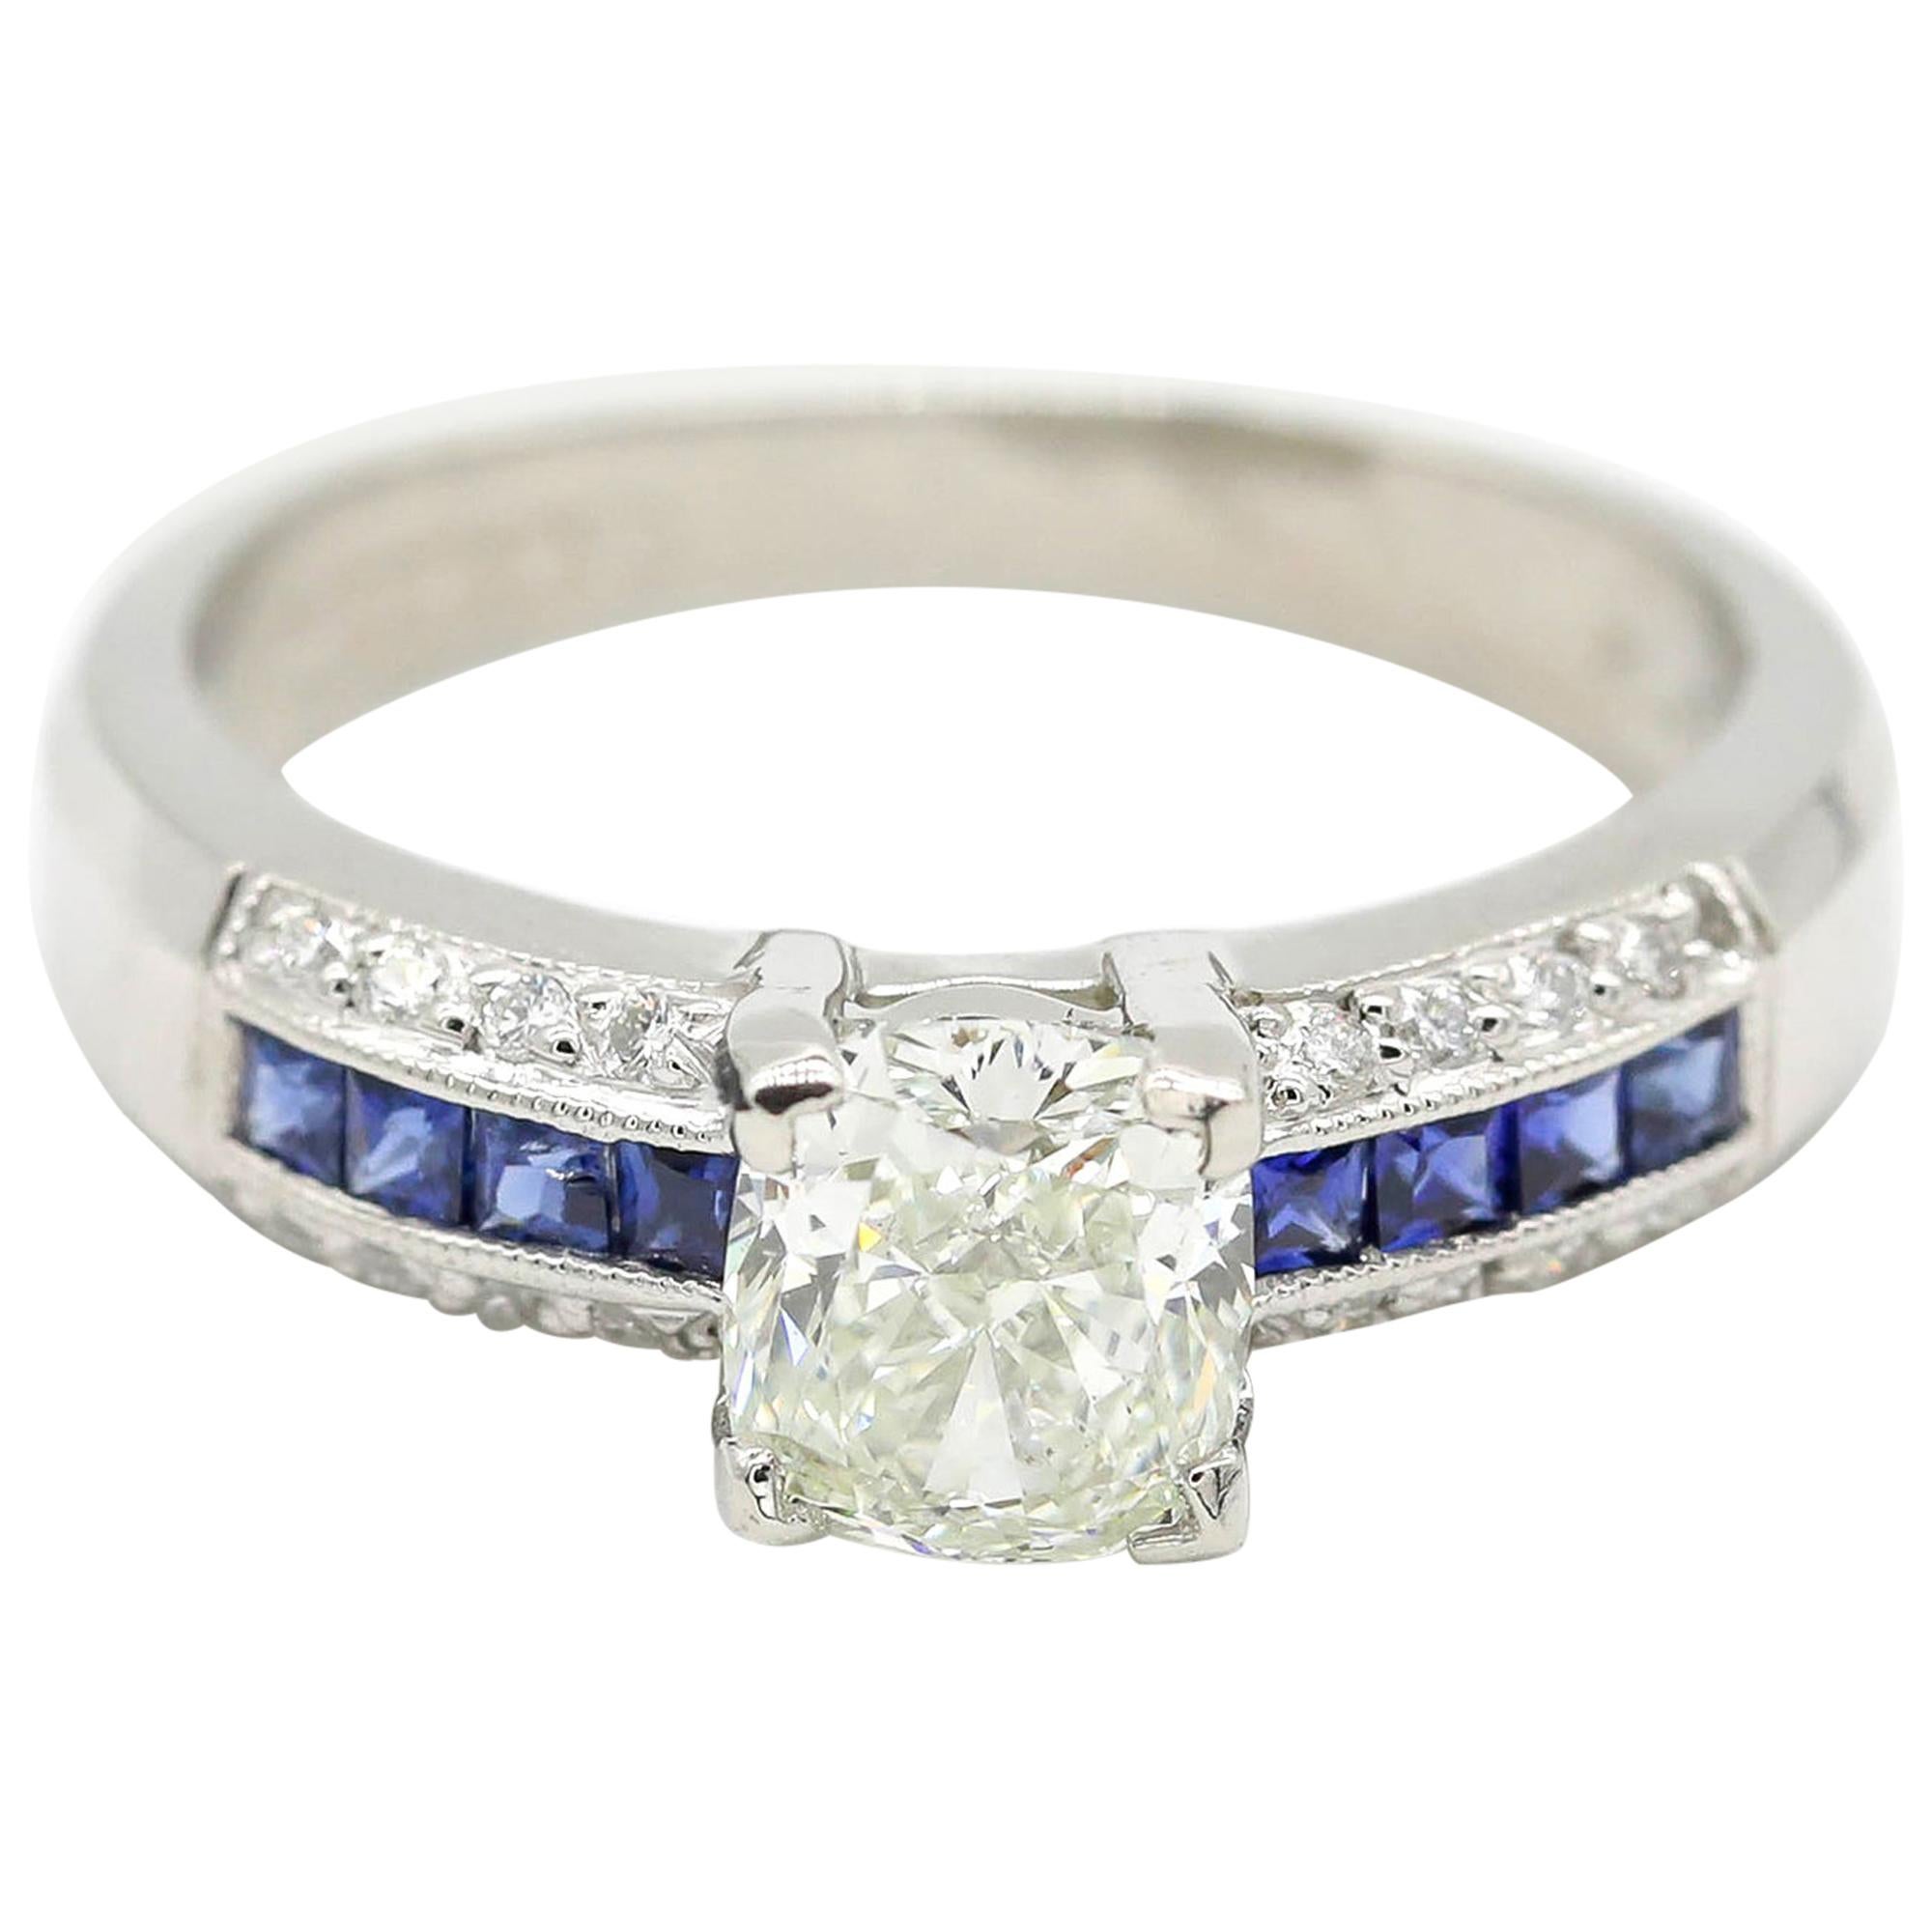 Blue Sapphire Princess Cut 1.7 Carat Diamond Ring Platinum by Tacori For Sale